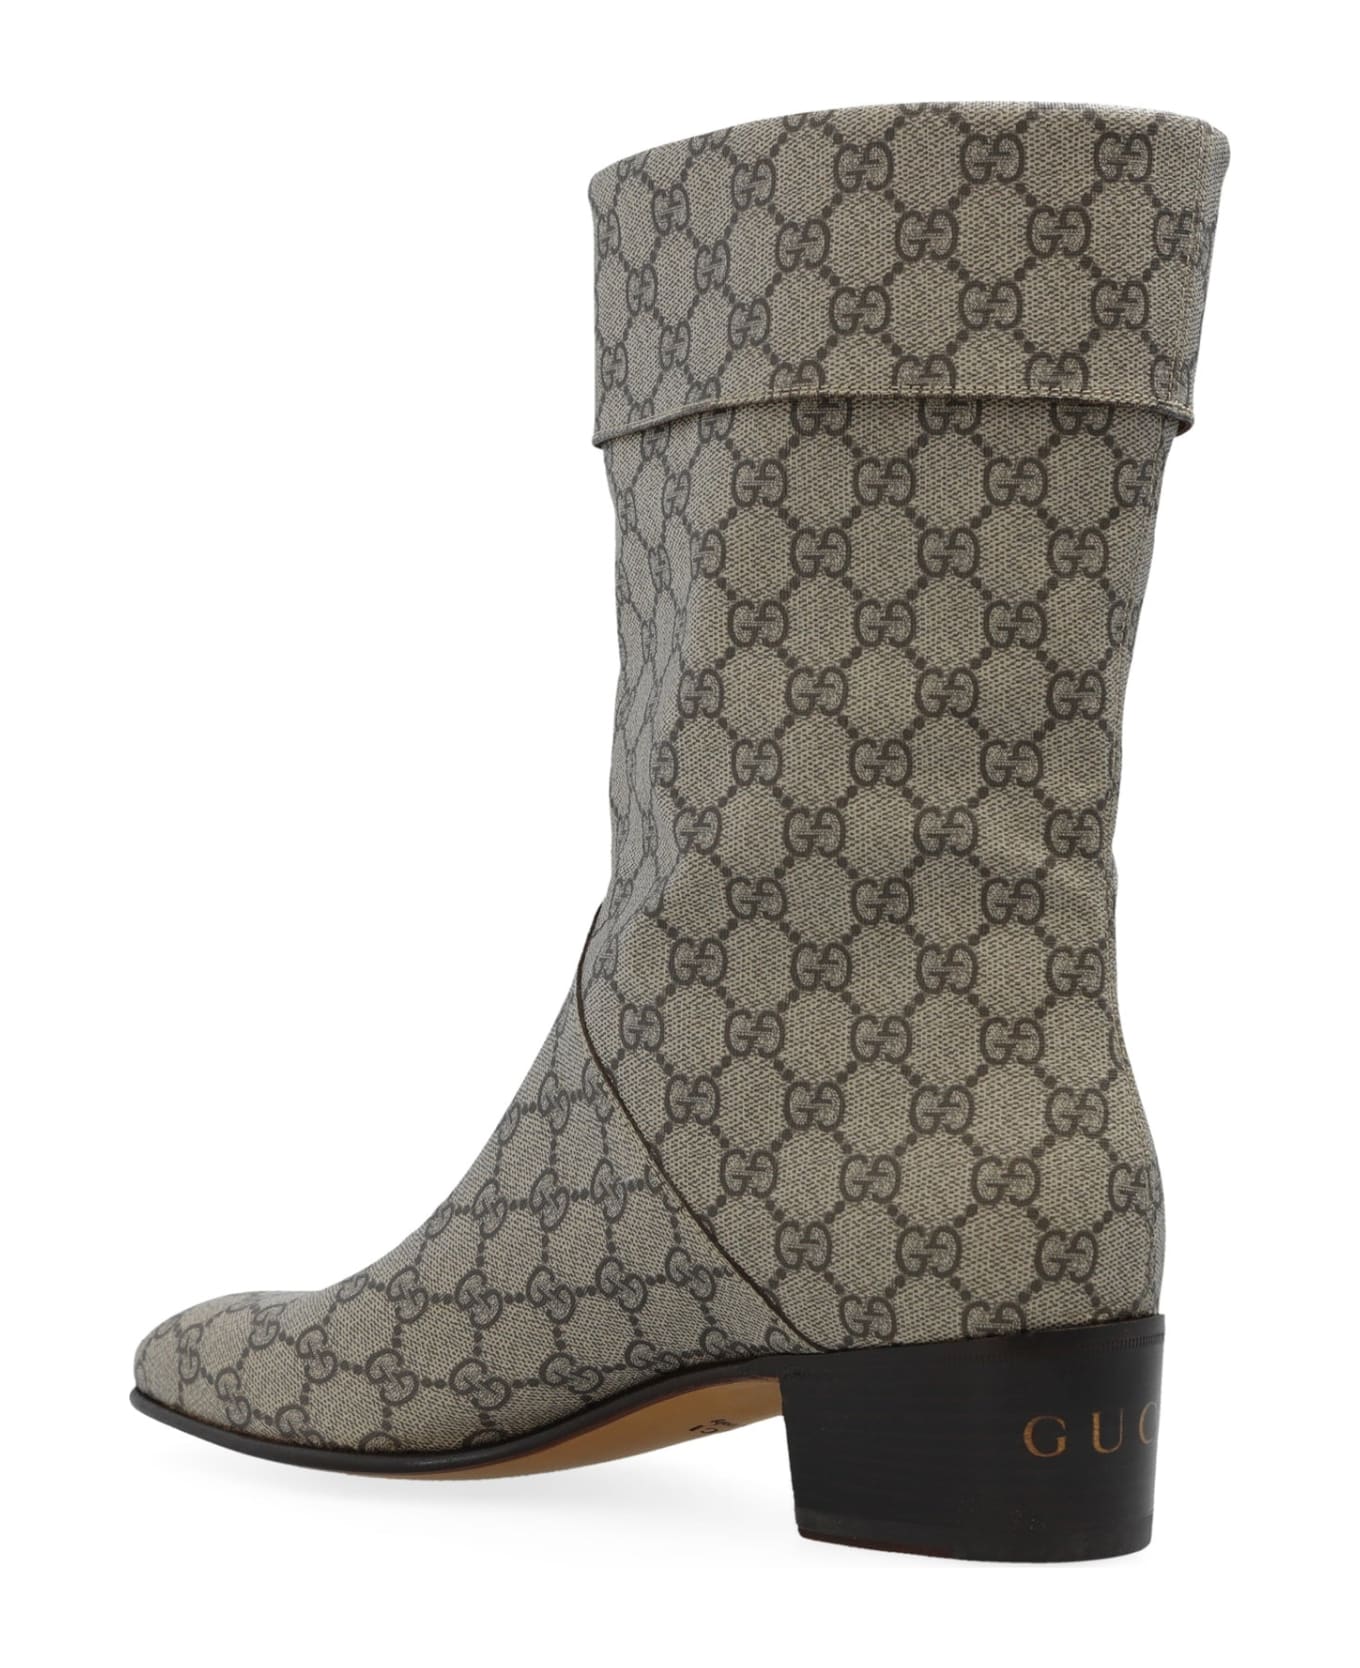 Gucci Heeled Monogram Boots - Beige